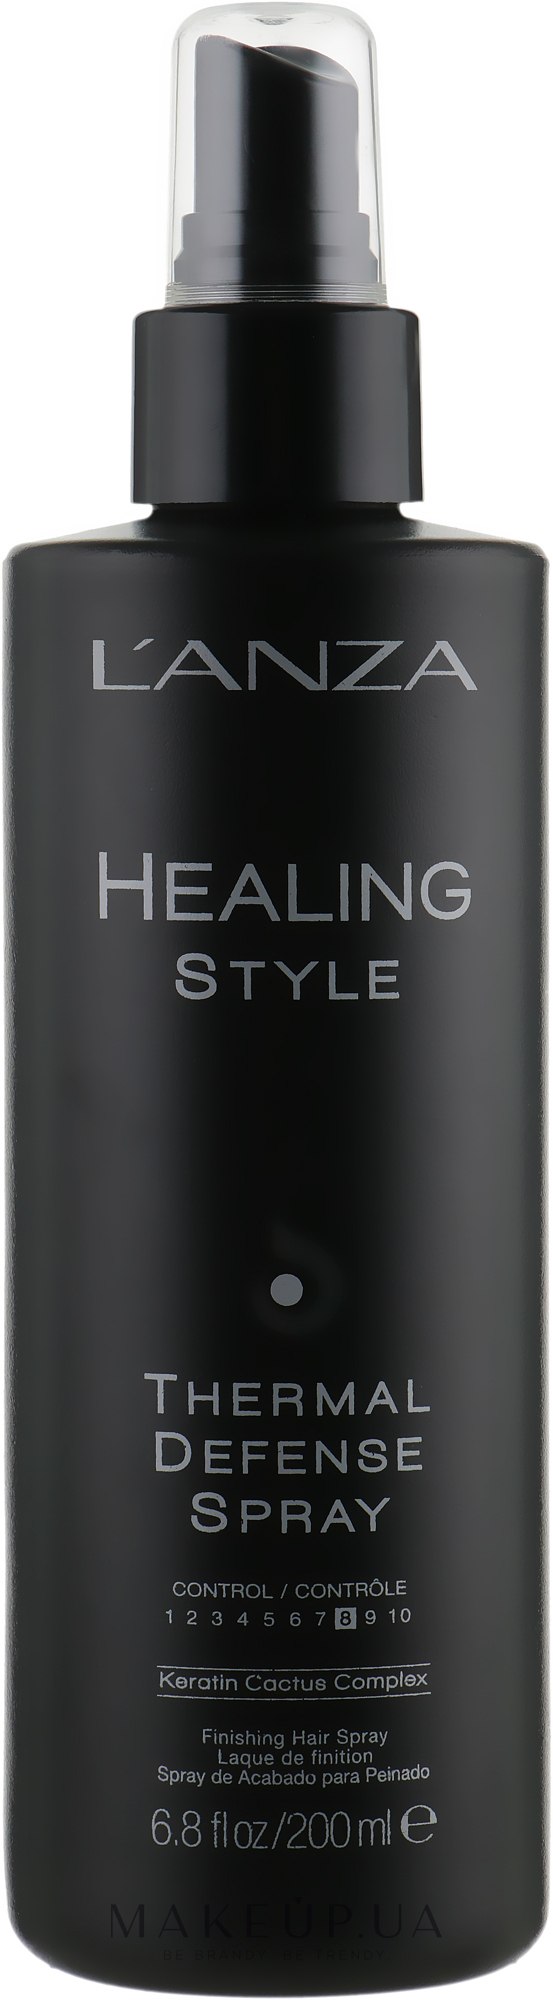 Защитный спрей для волос - L'anza Healing Style Thermal Defense Spray — фото 200ml